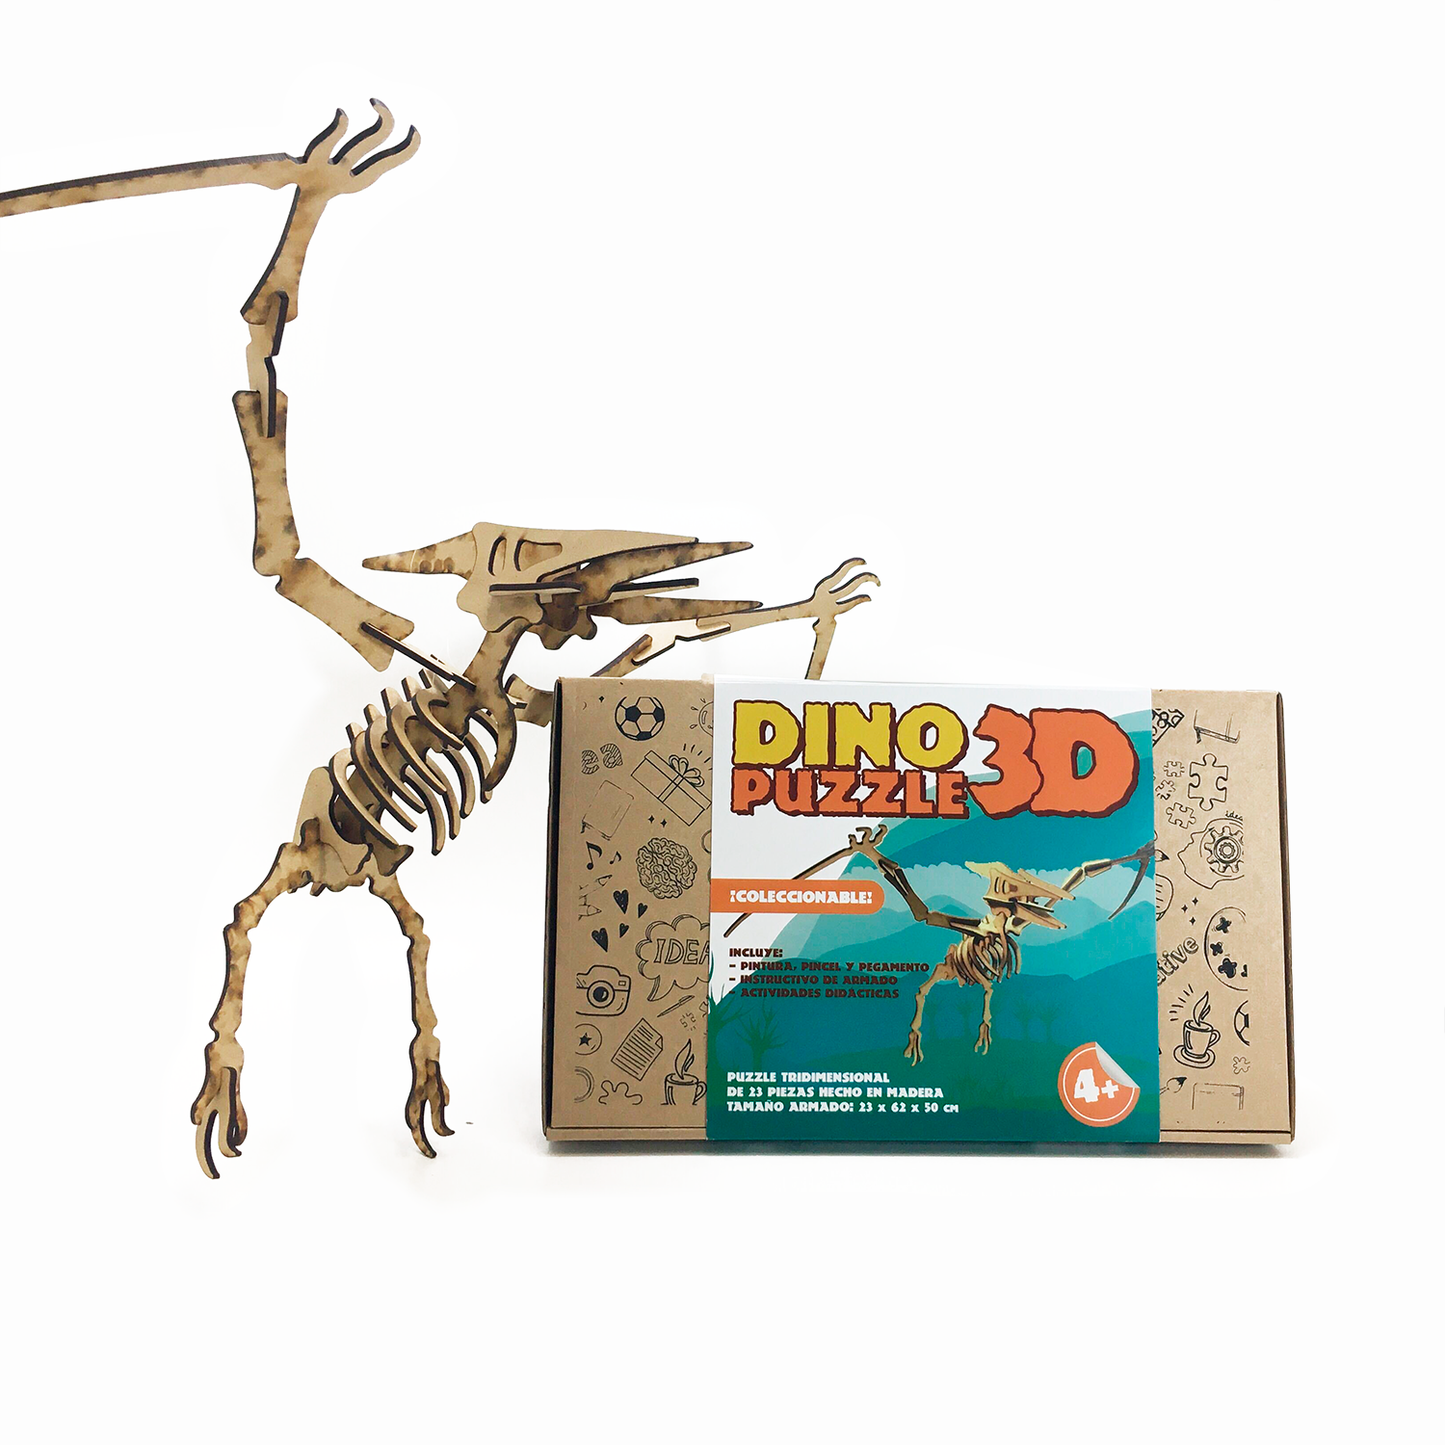 Dino puzzles 3d - Pteranodon